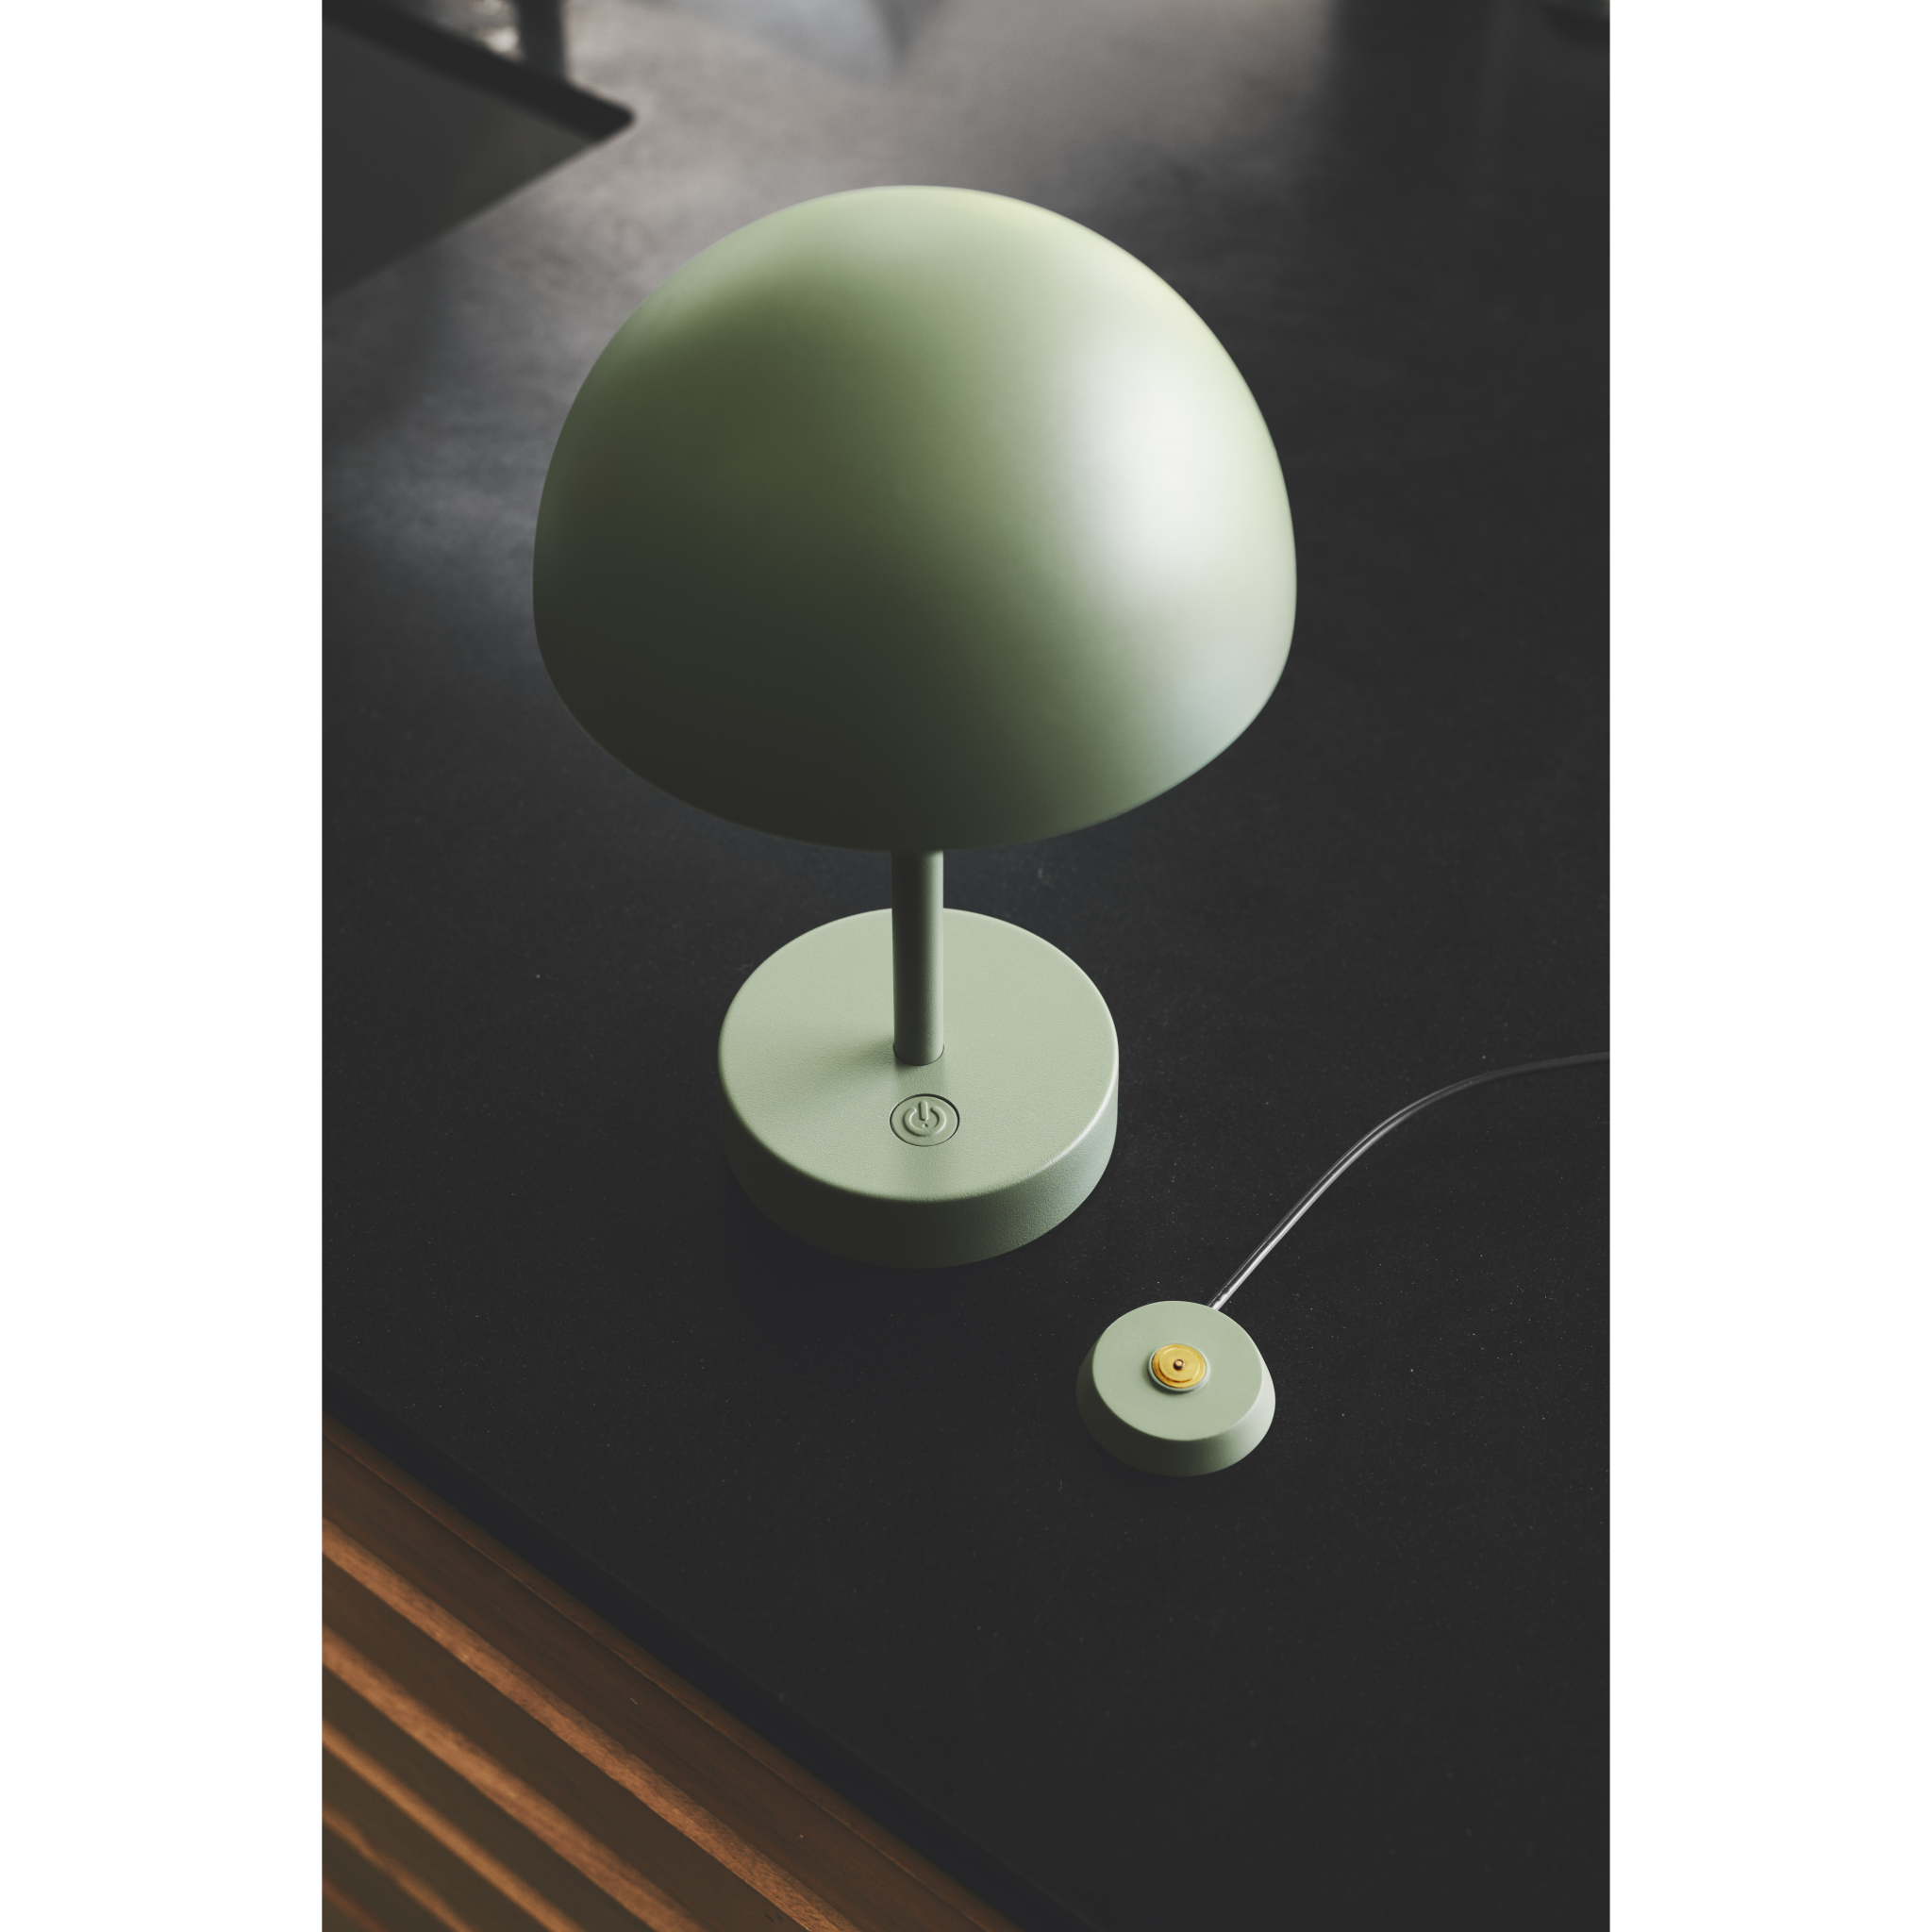 5704924017506 Nordlux Ellen To-Go olive - Bordlampe portable Lamper,Bordlamper,Trådløse bordlamper 87100011620 2418015023